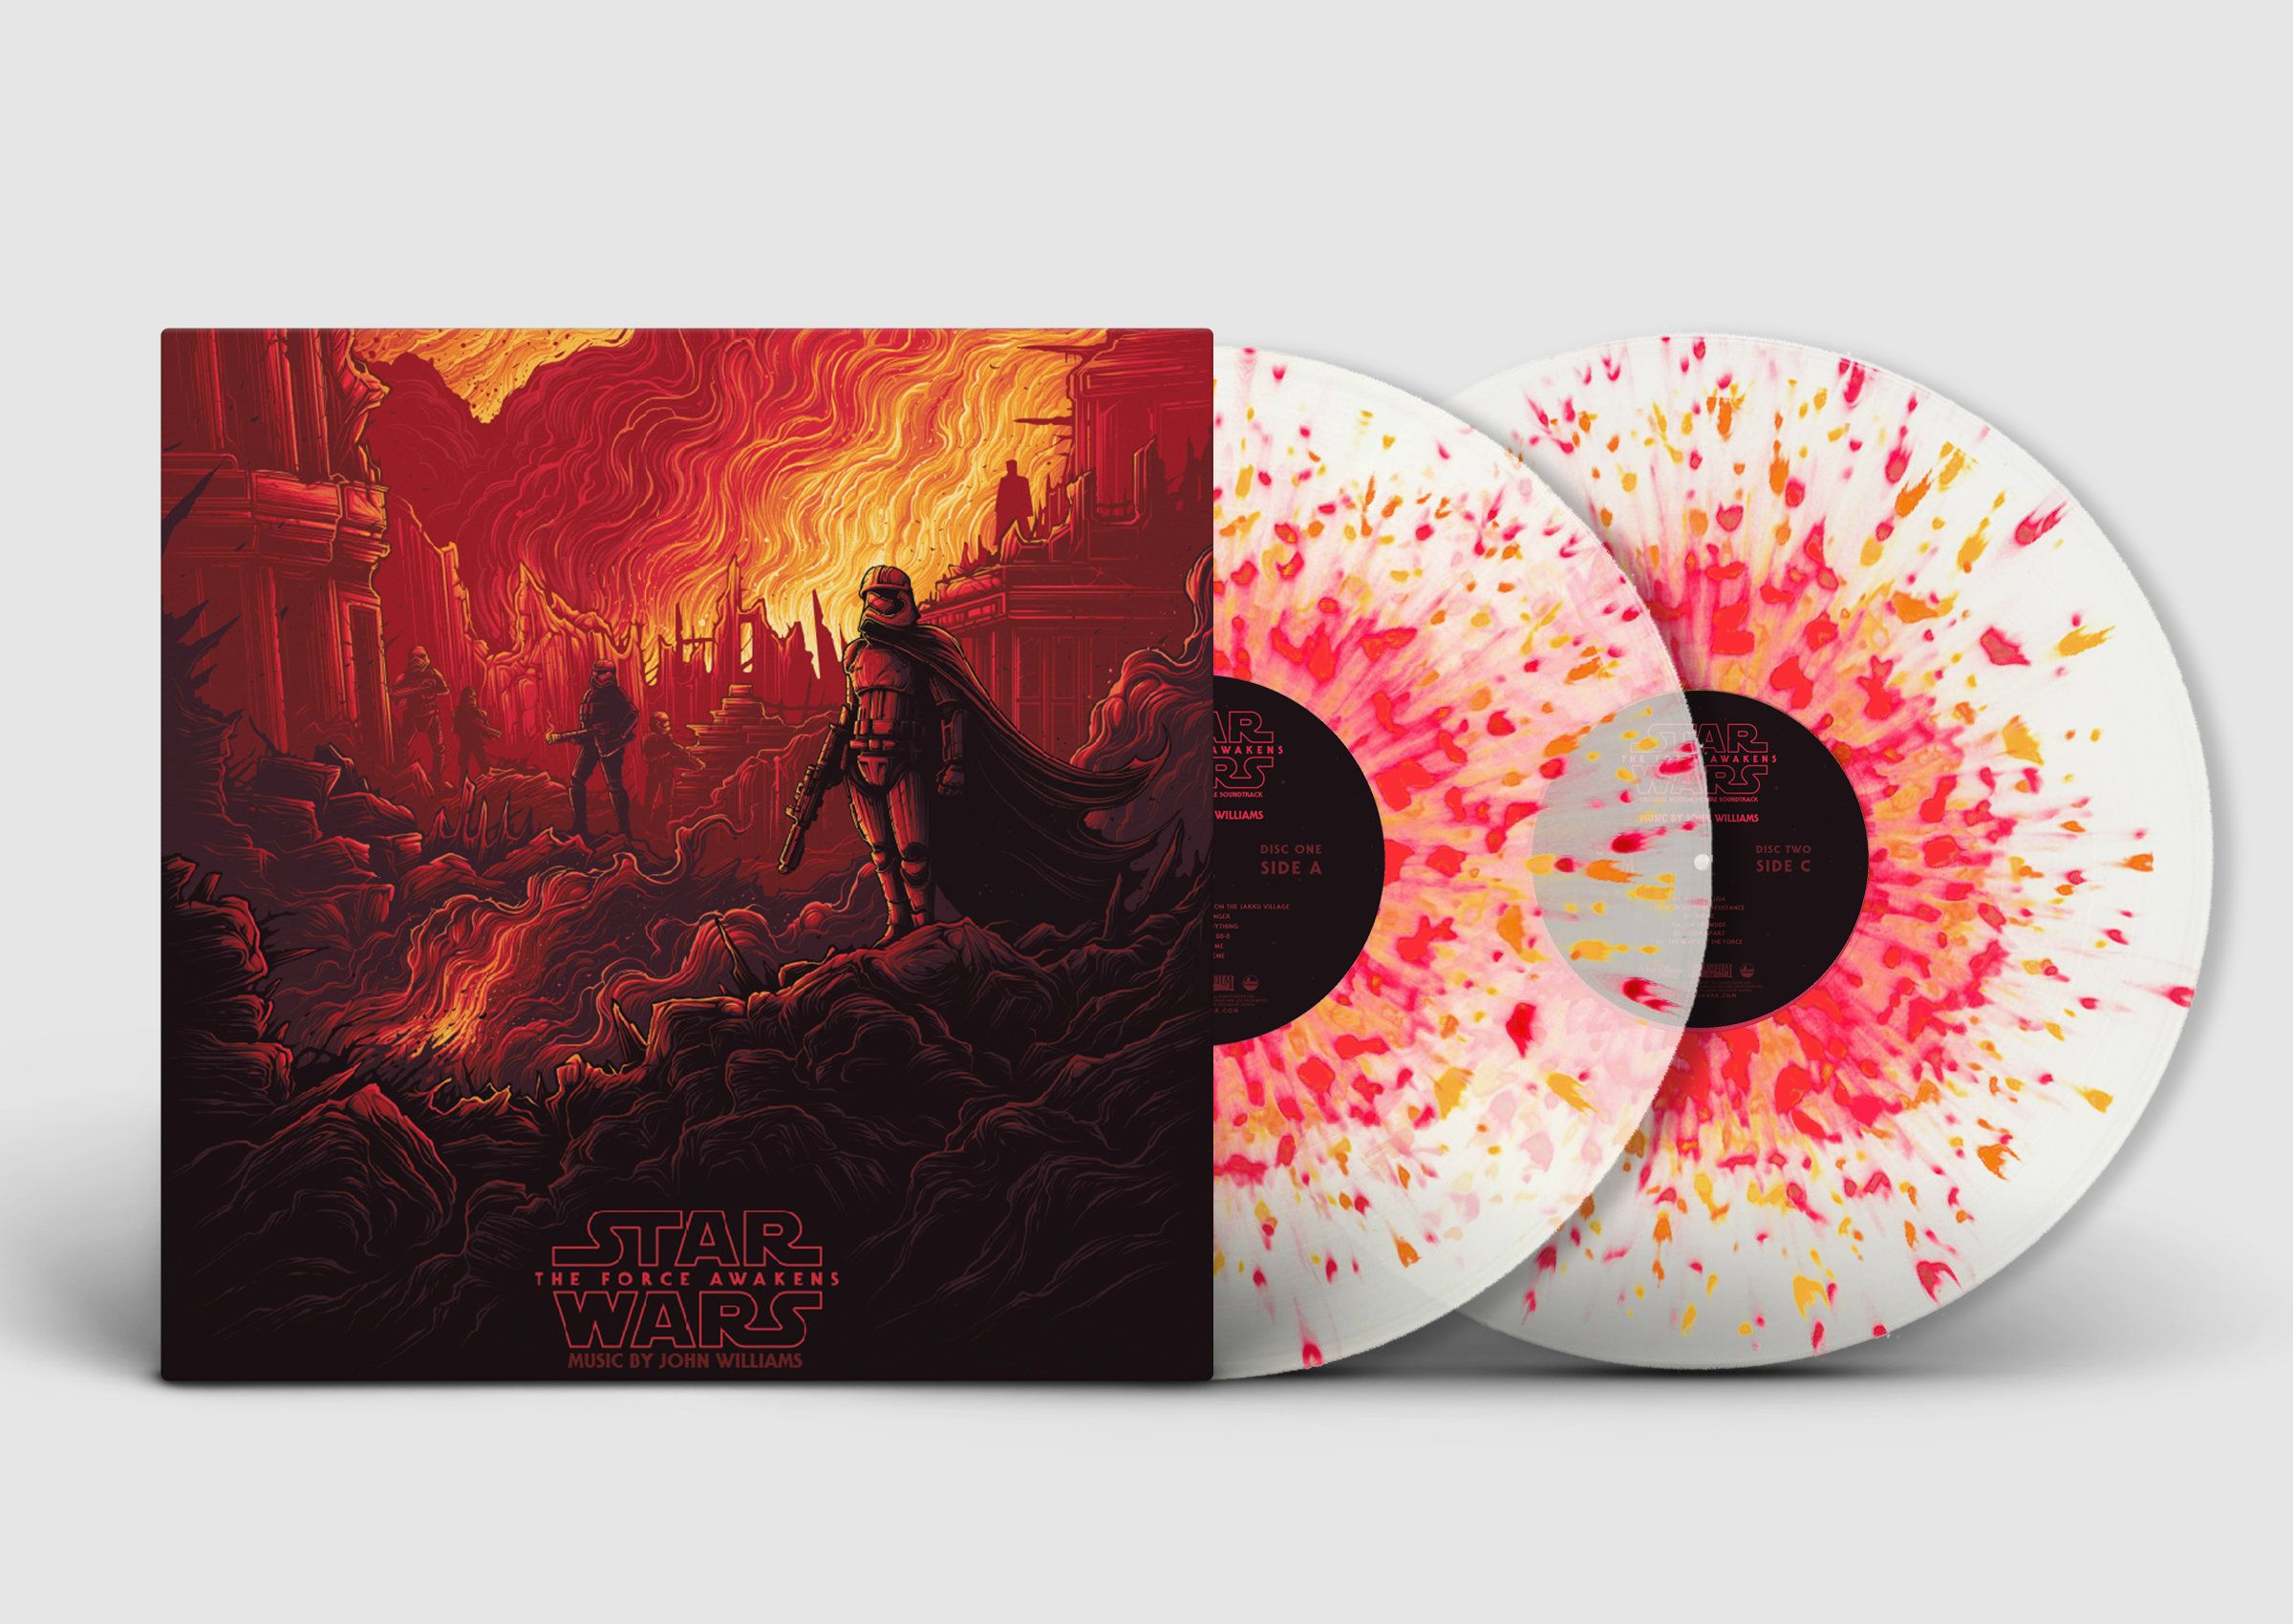 Star Wars: The Force Awakens Collector's Vinyls